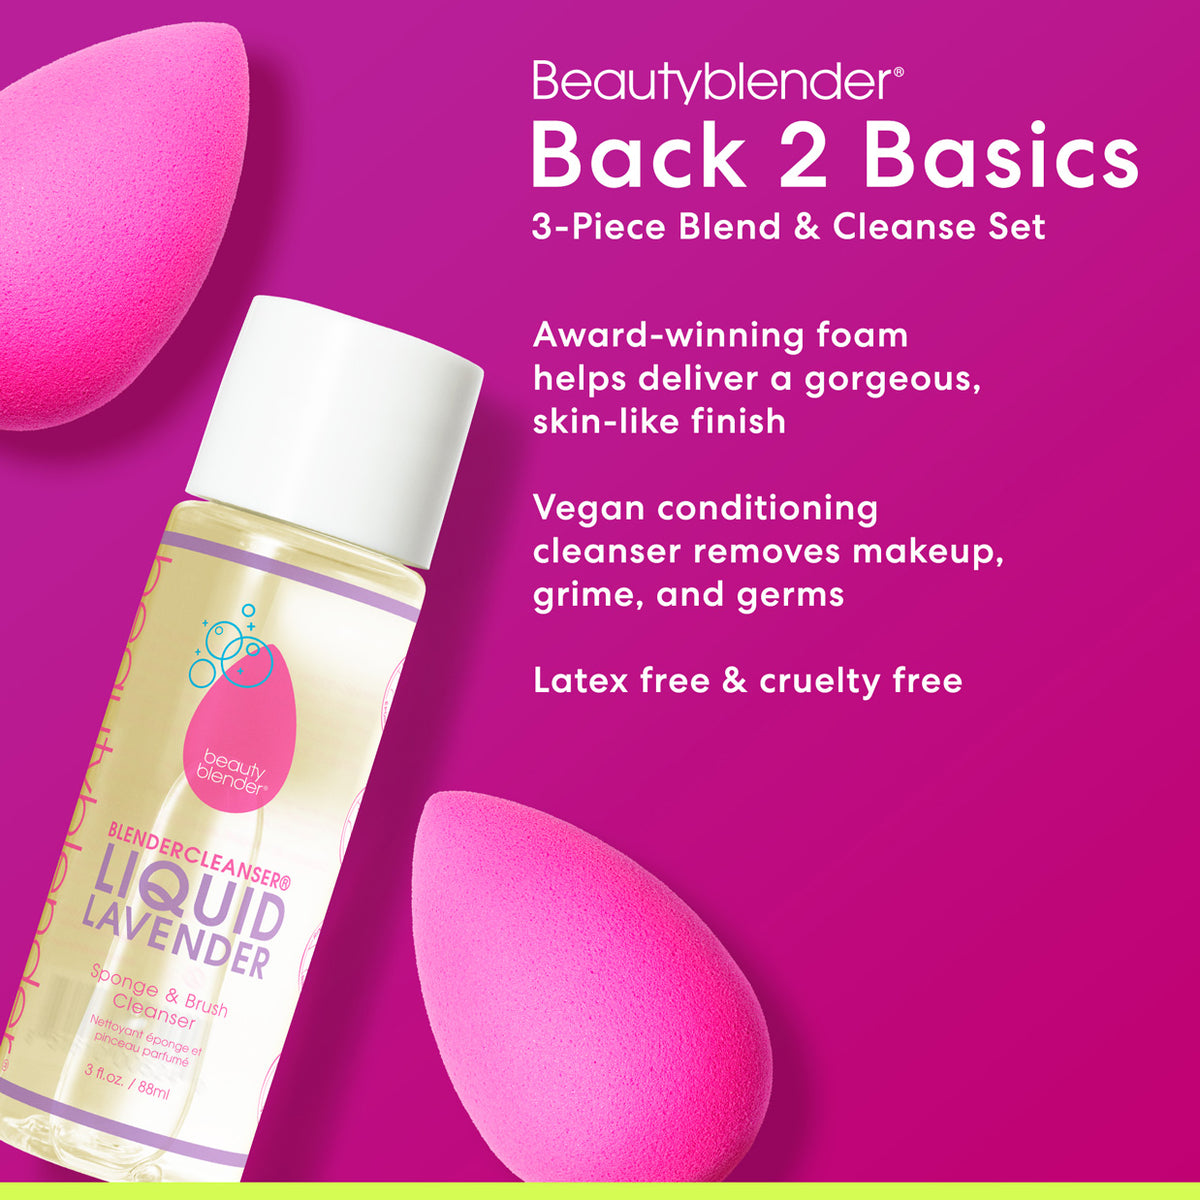 Back 2 Basics 3-Piece Blend & Cleanse Set.